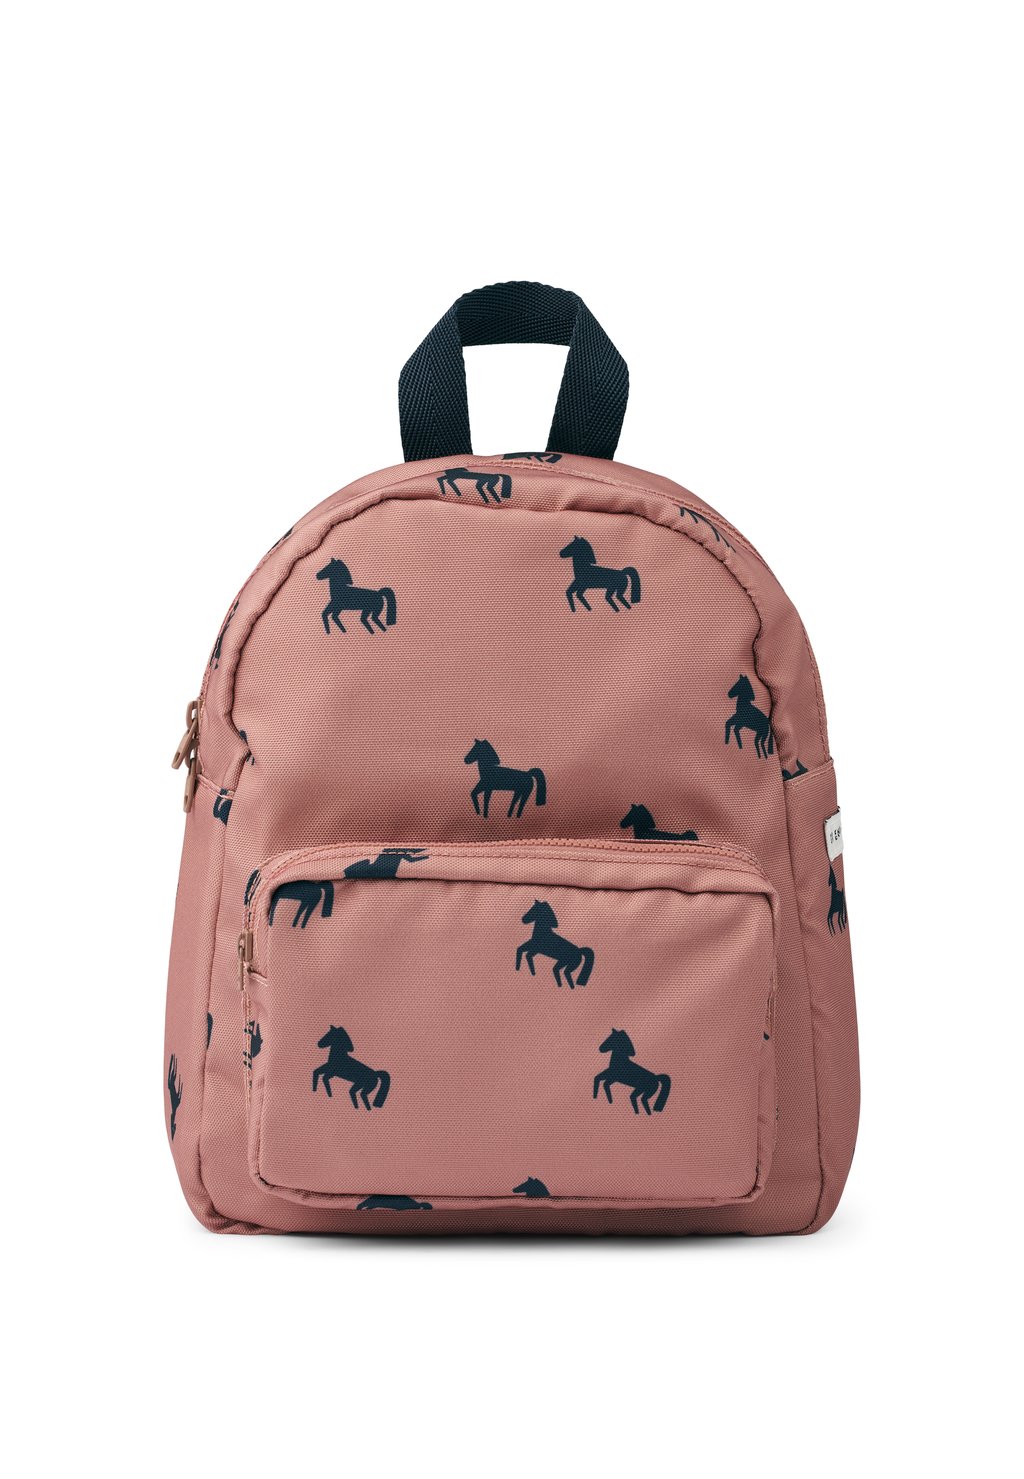 Рюкзак Allan Backpack Unisex Liewood, цвет horses / dark rosetta рюкзак для путешествий backpack mio unisex molo цвет blue horses